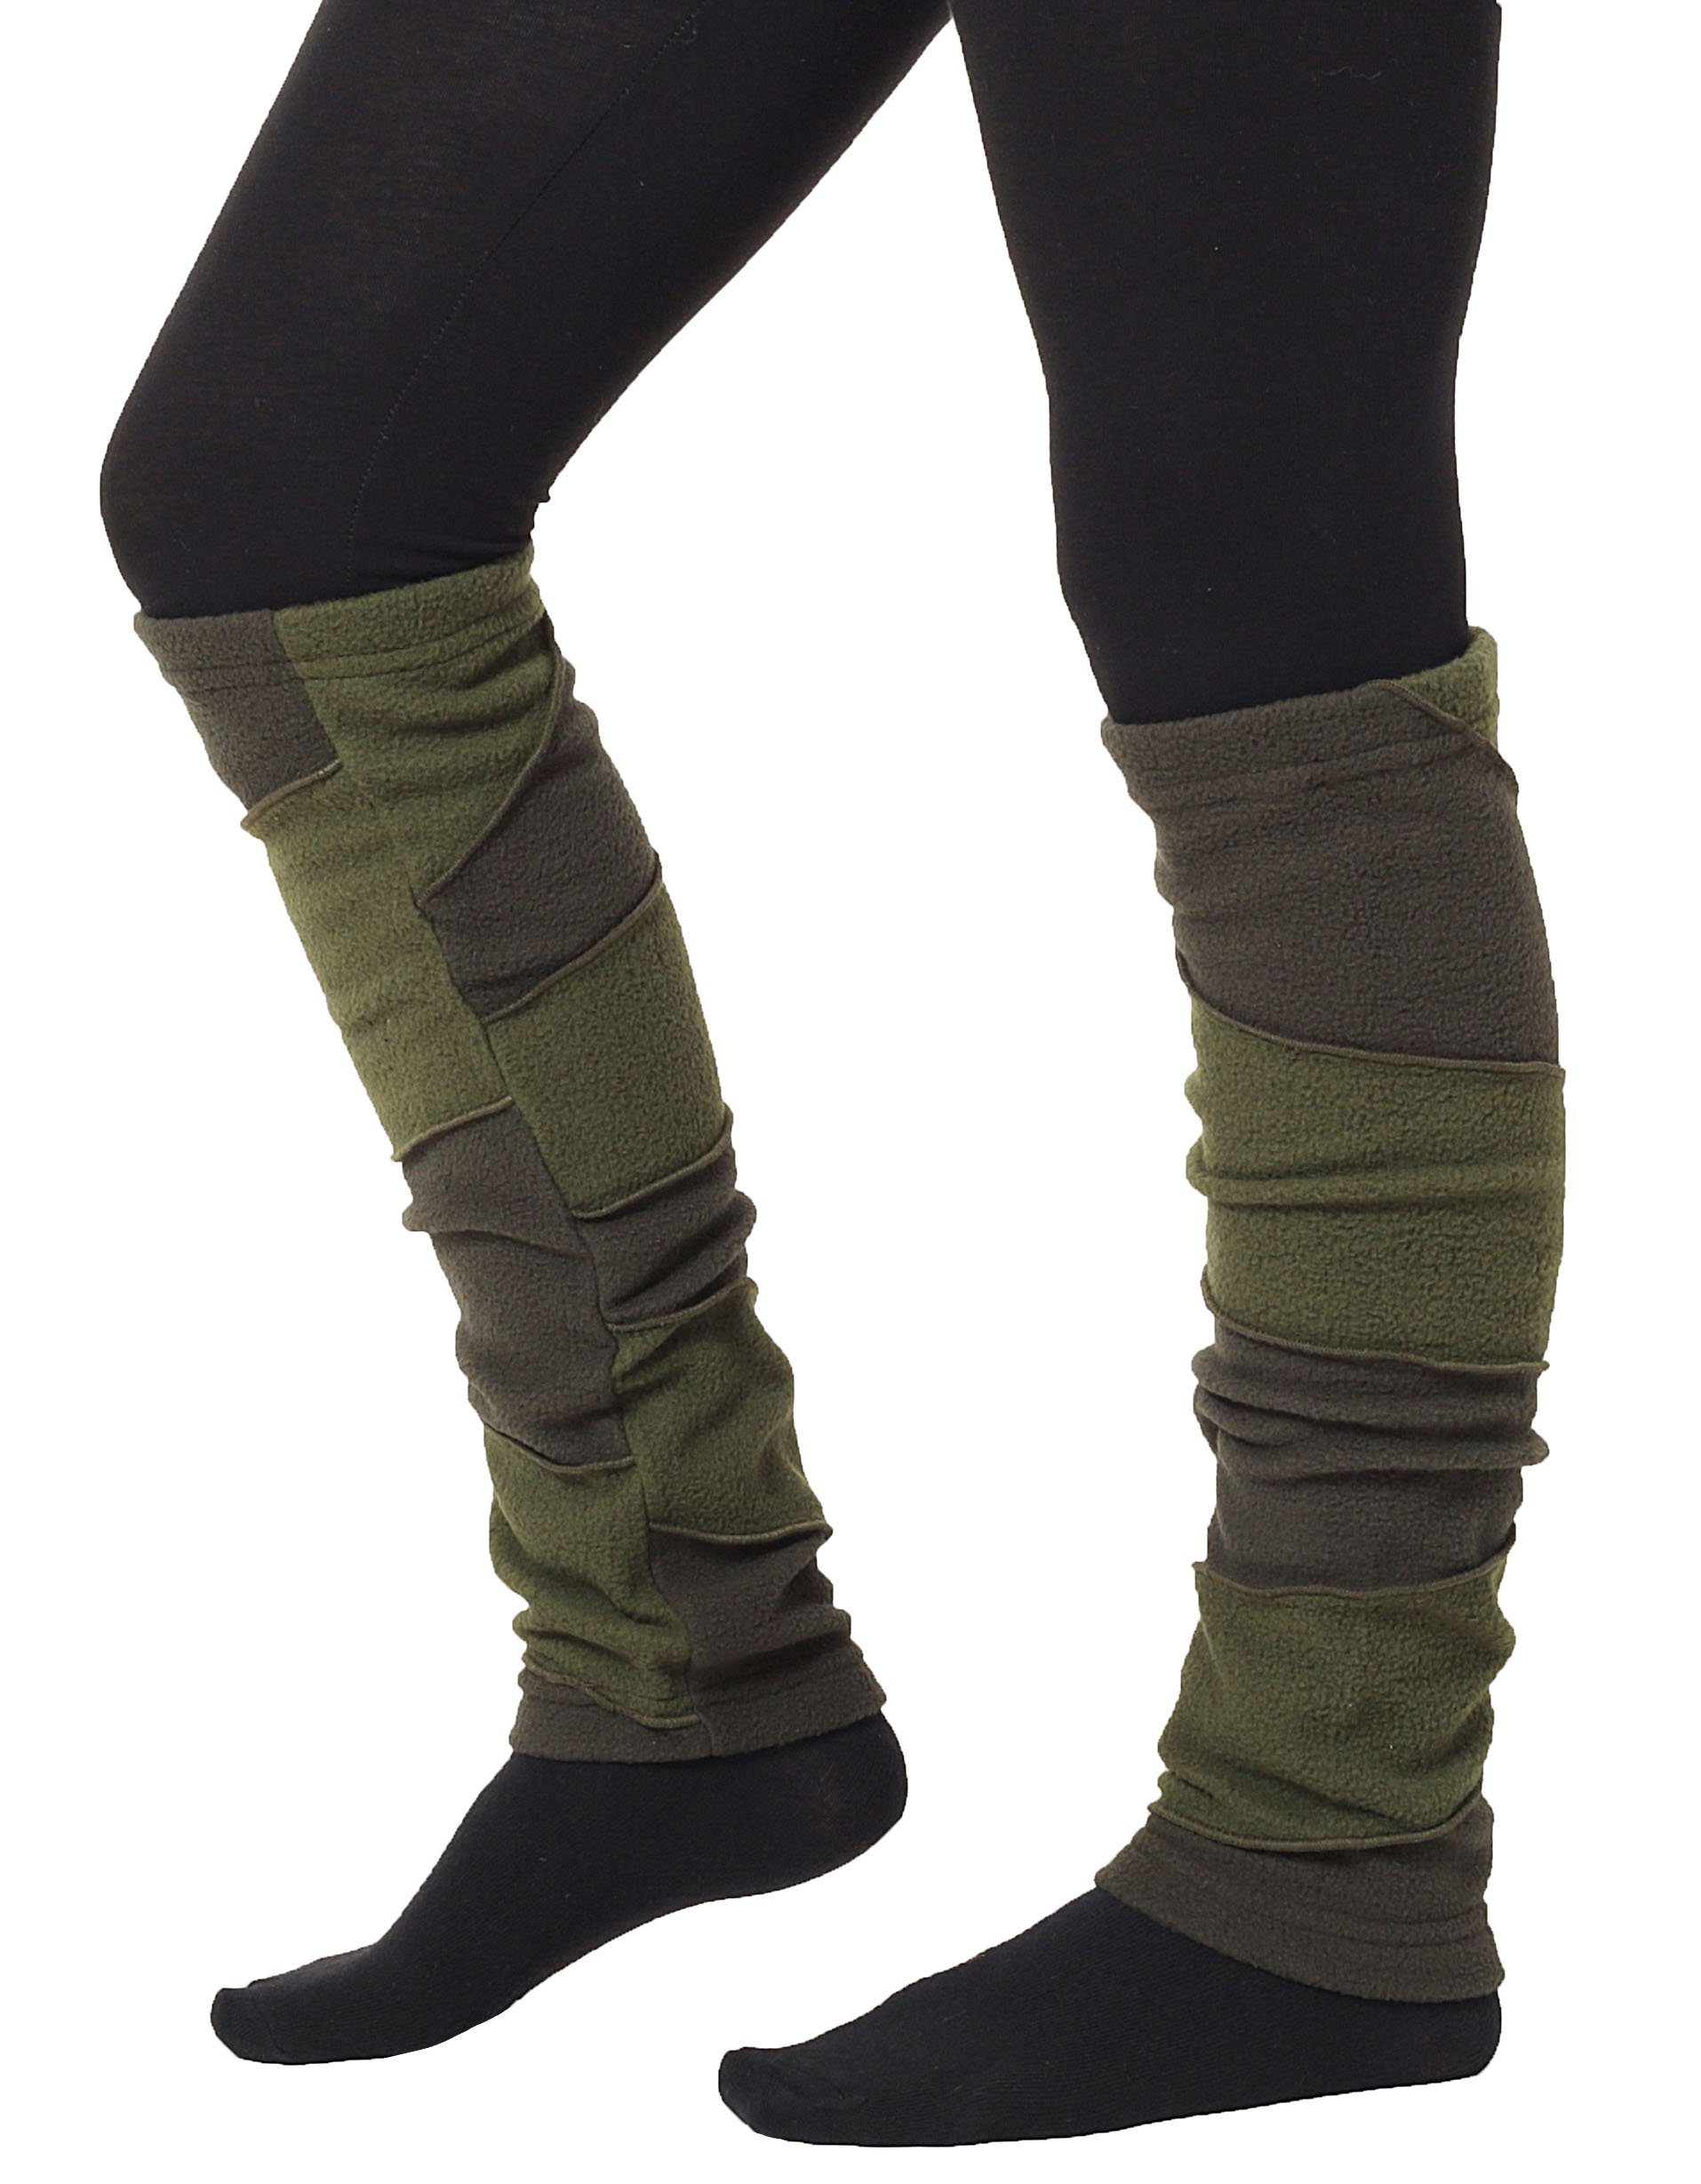 PUREWONDER Beinstulpen Stulpen zweifarbig aus Fleece lw27 (1 Paar) Einheitsgröße Grün | Beinstulpen